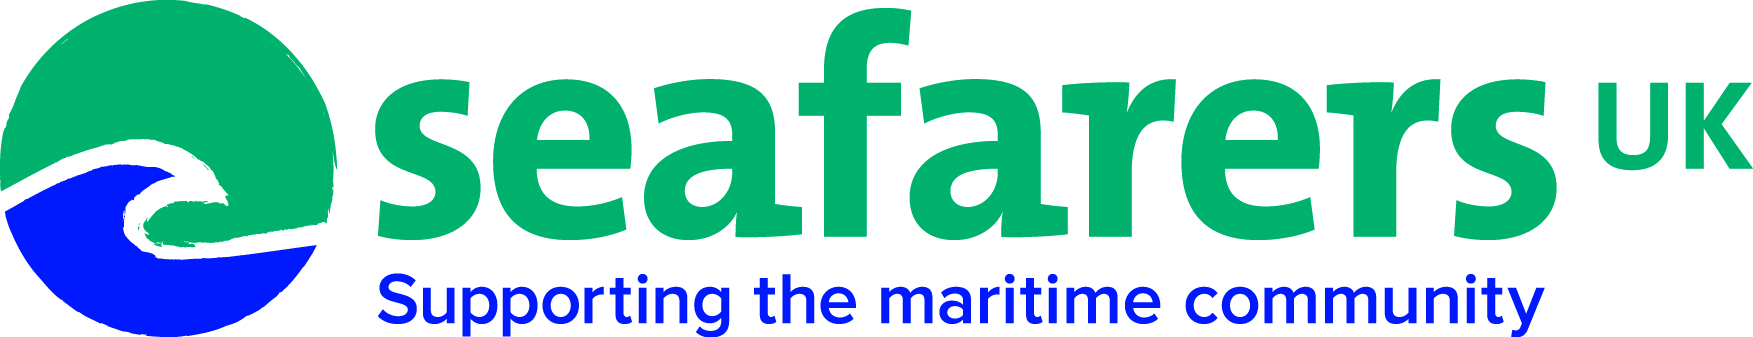 Seafarers UK Logo Col